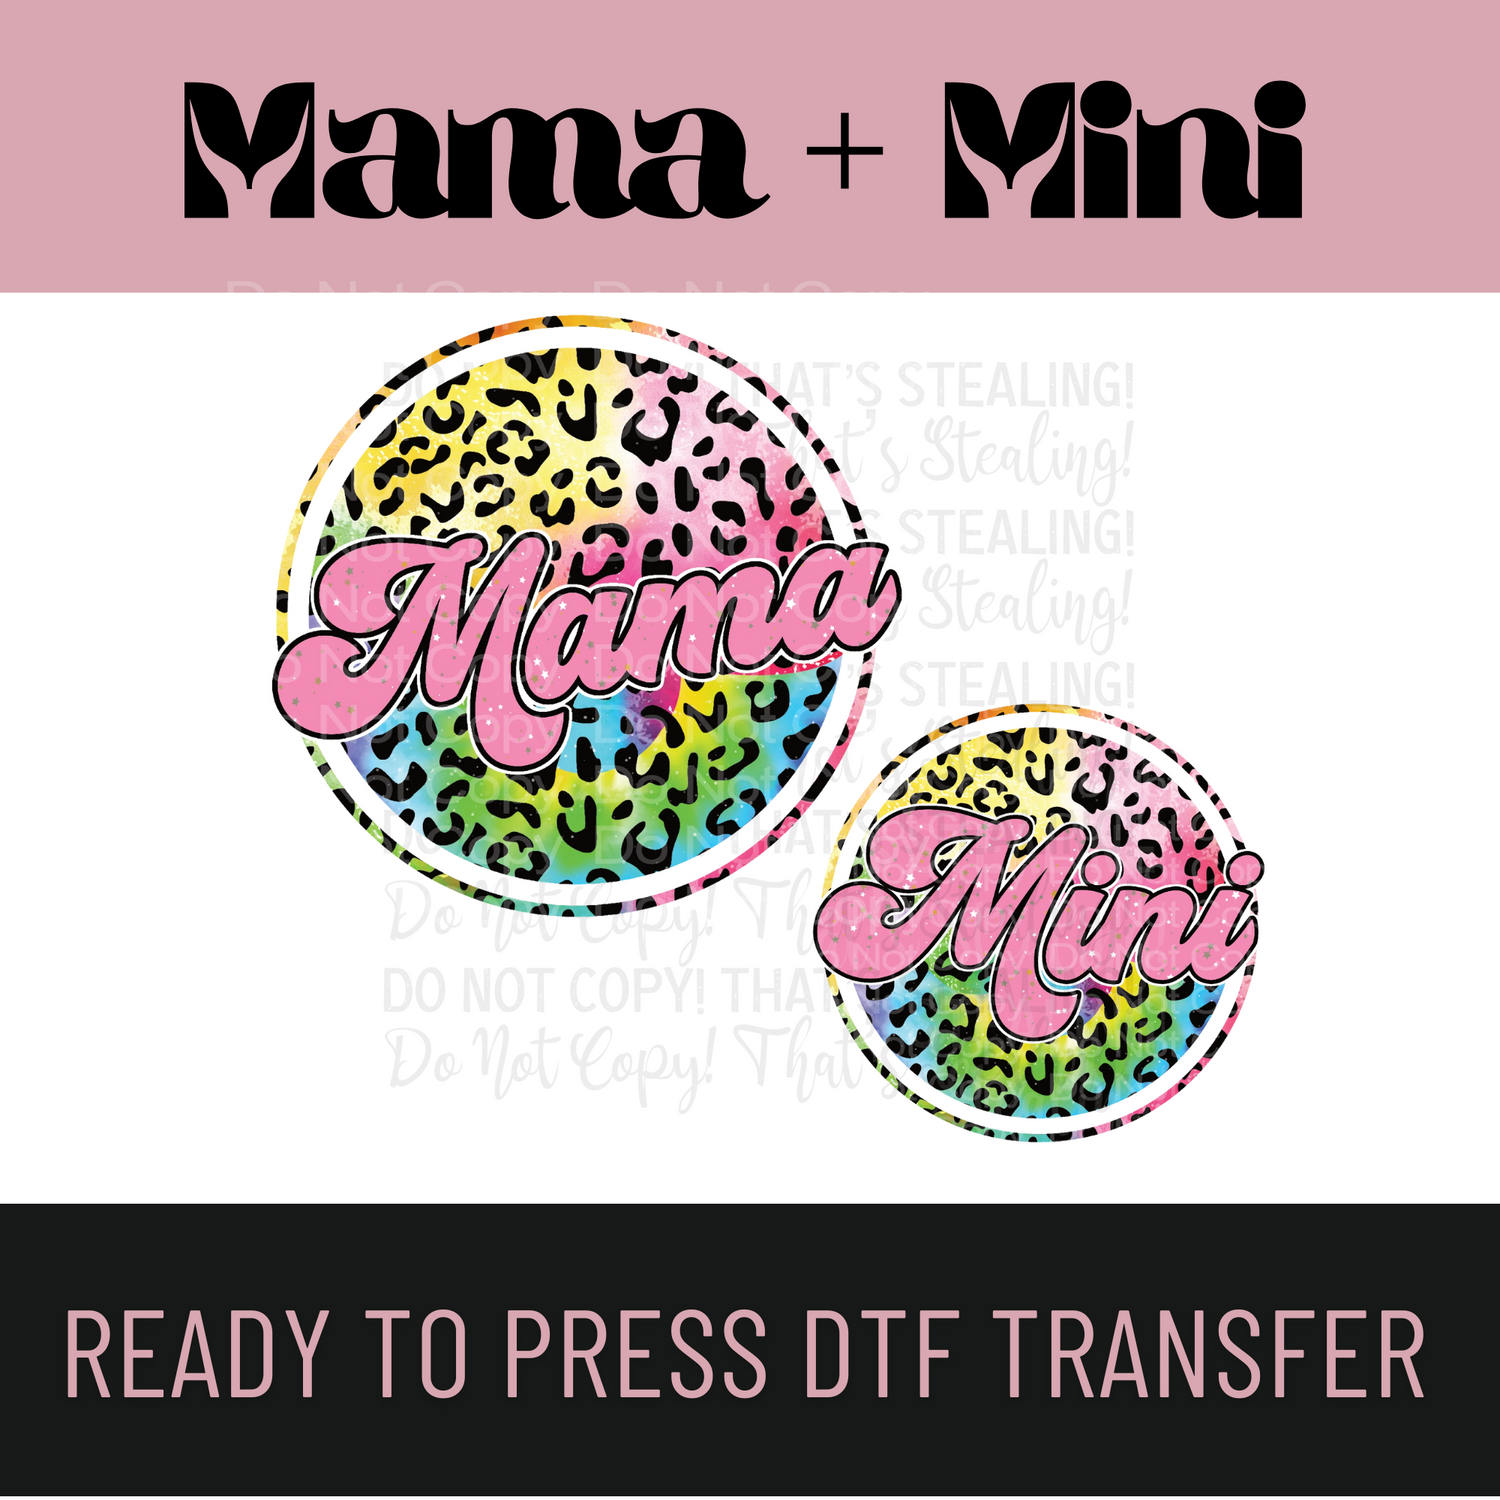 Mama Mini